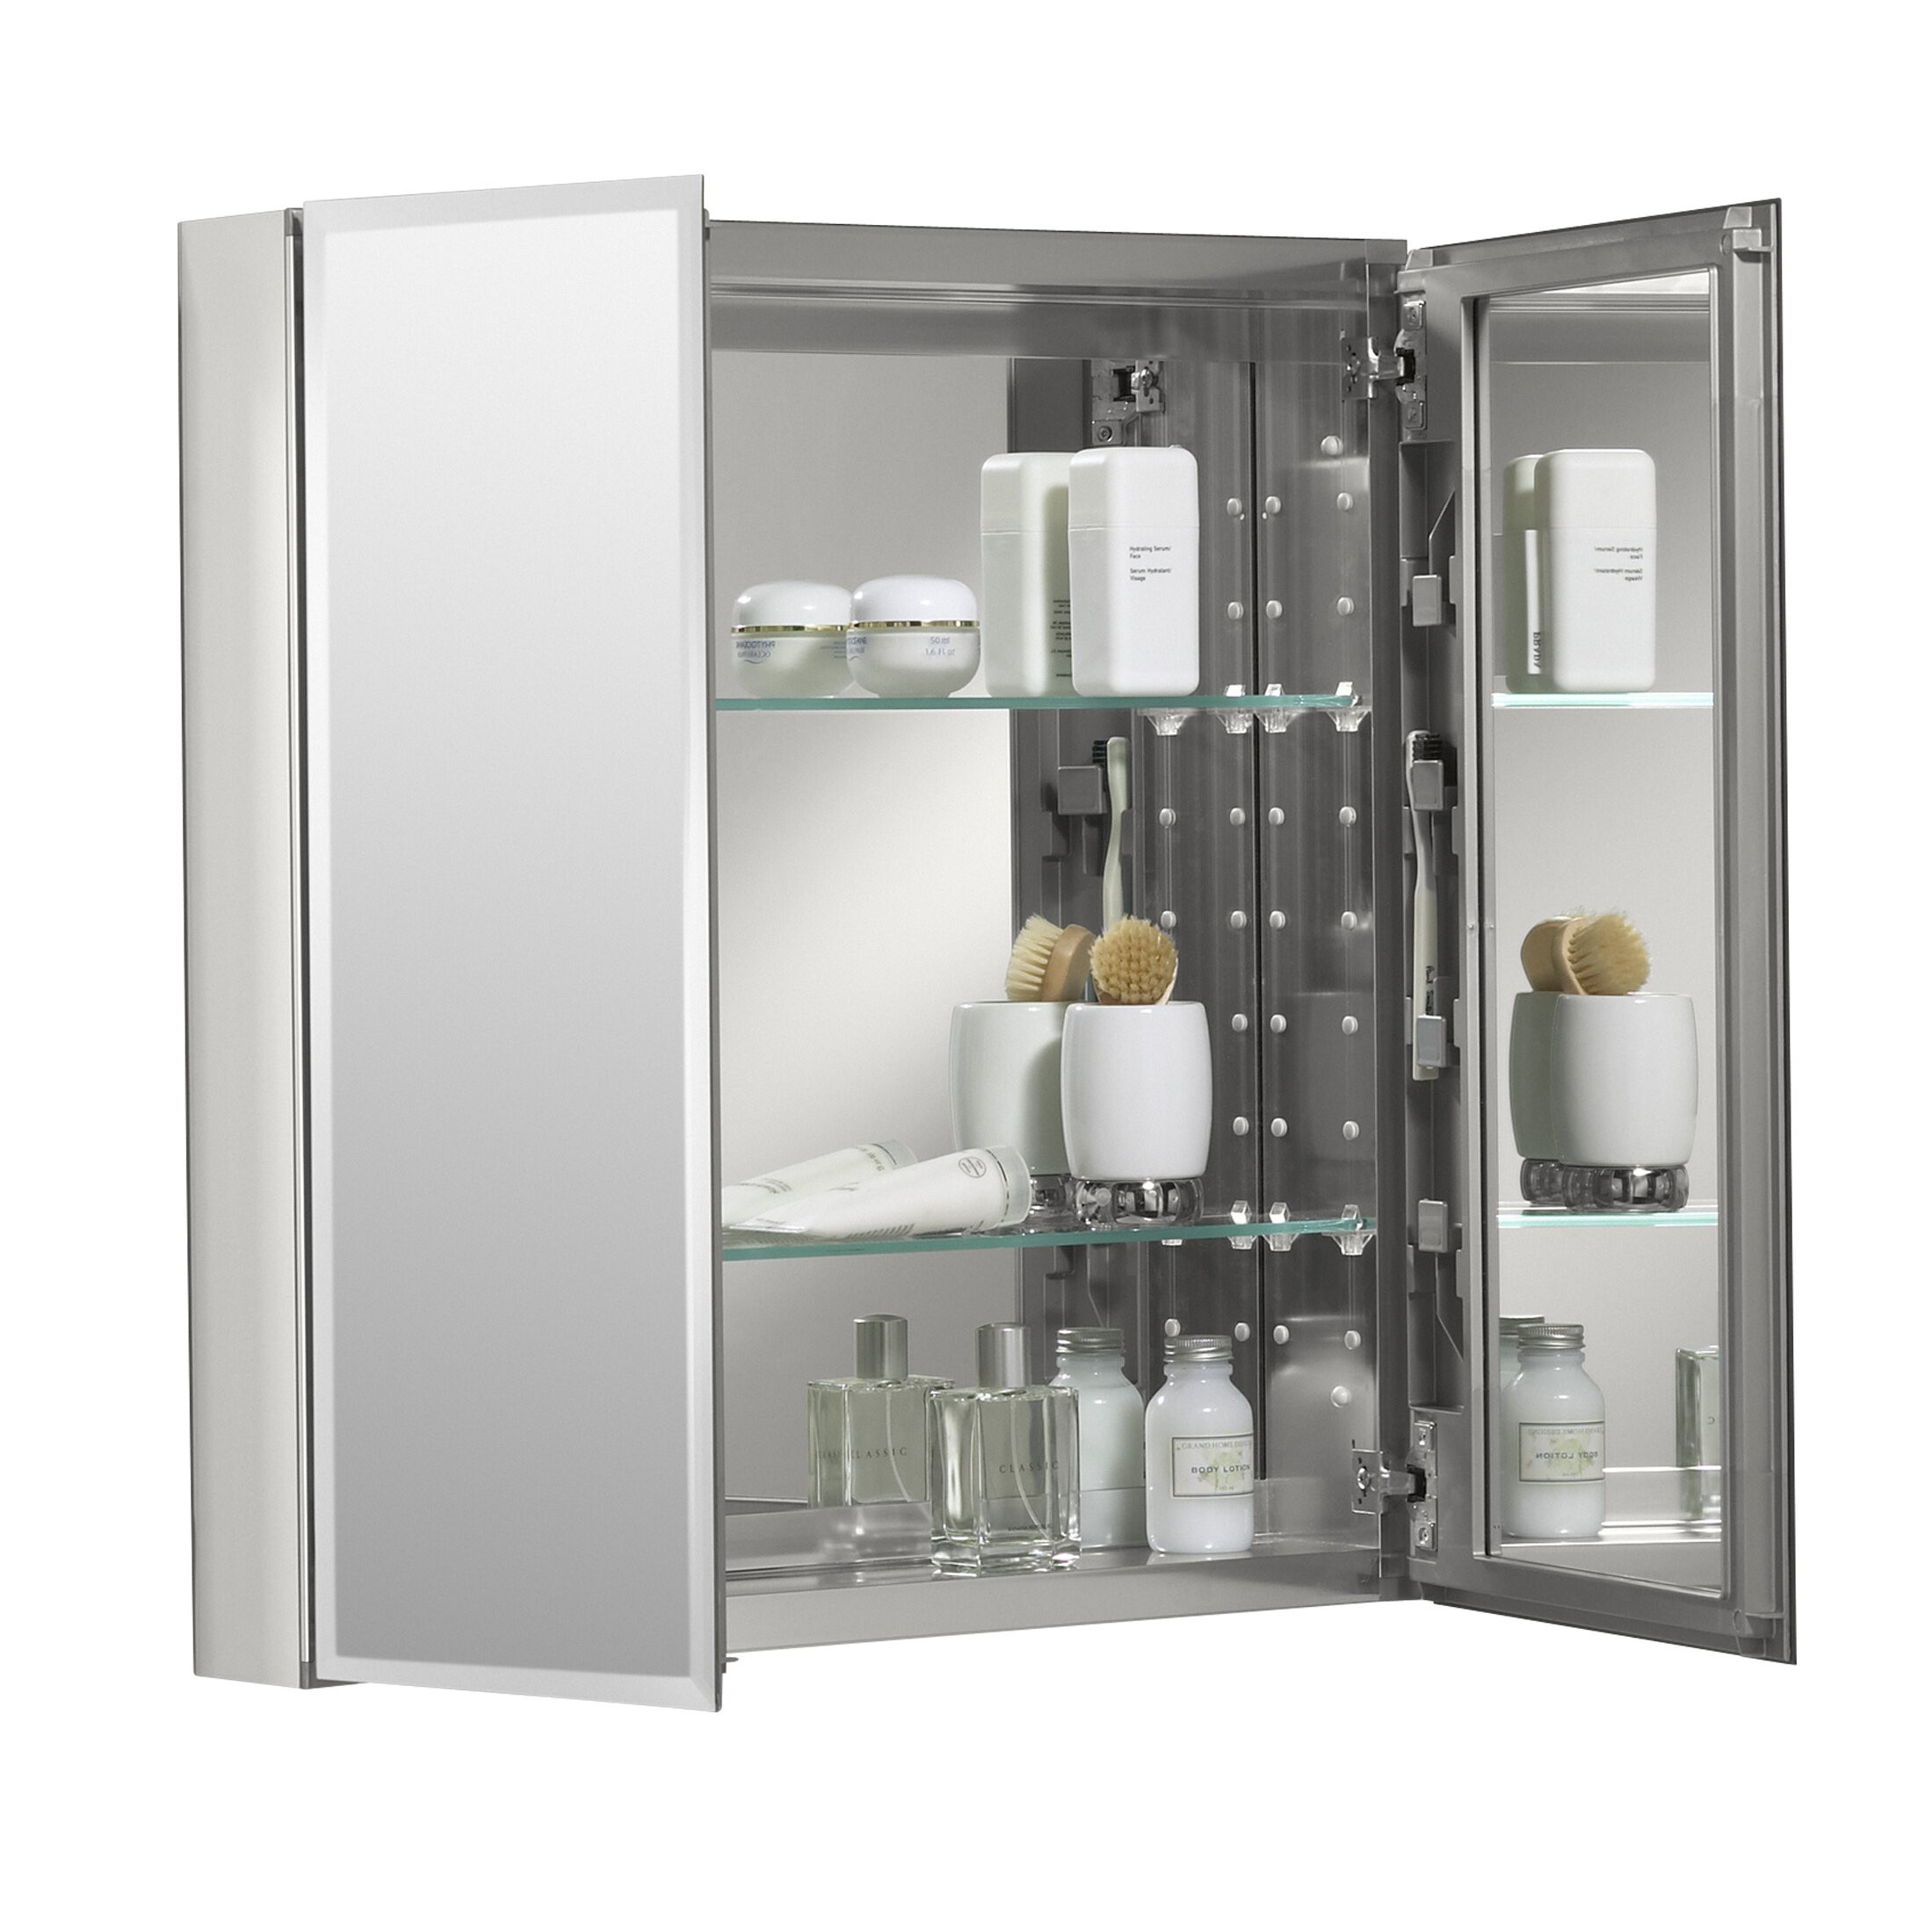 Kohler Bathroom Mirror Cabinet
 Kohler 25" x 26" Aluminum Mirrored Medicine Cabinet